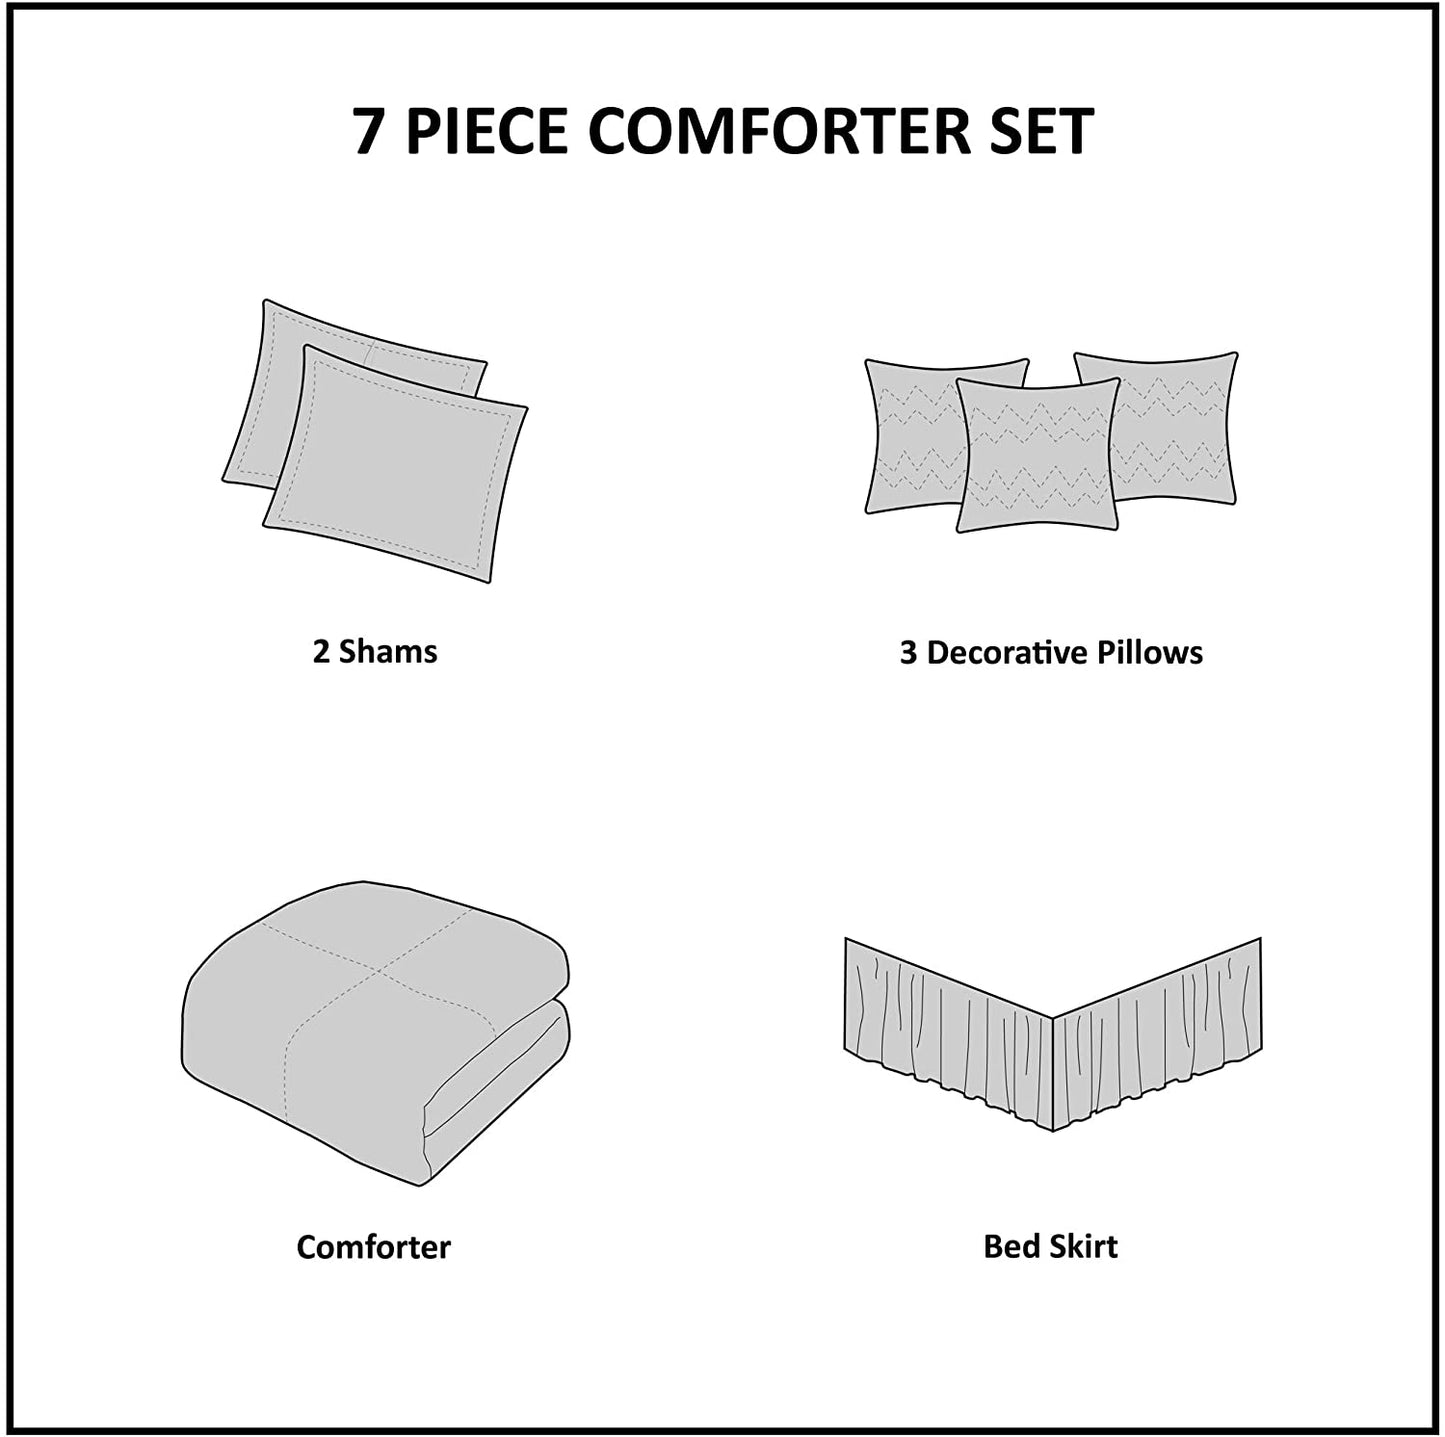 Ridge Comforter Set-Cabin Lodge Plaid Herringbone Design All Season down Alternative Cozy Bedding with Matching Bedskirt, Shams, Decorative Pillow, Queen(90"X90"), Neutral 7 Piece